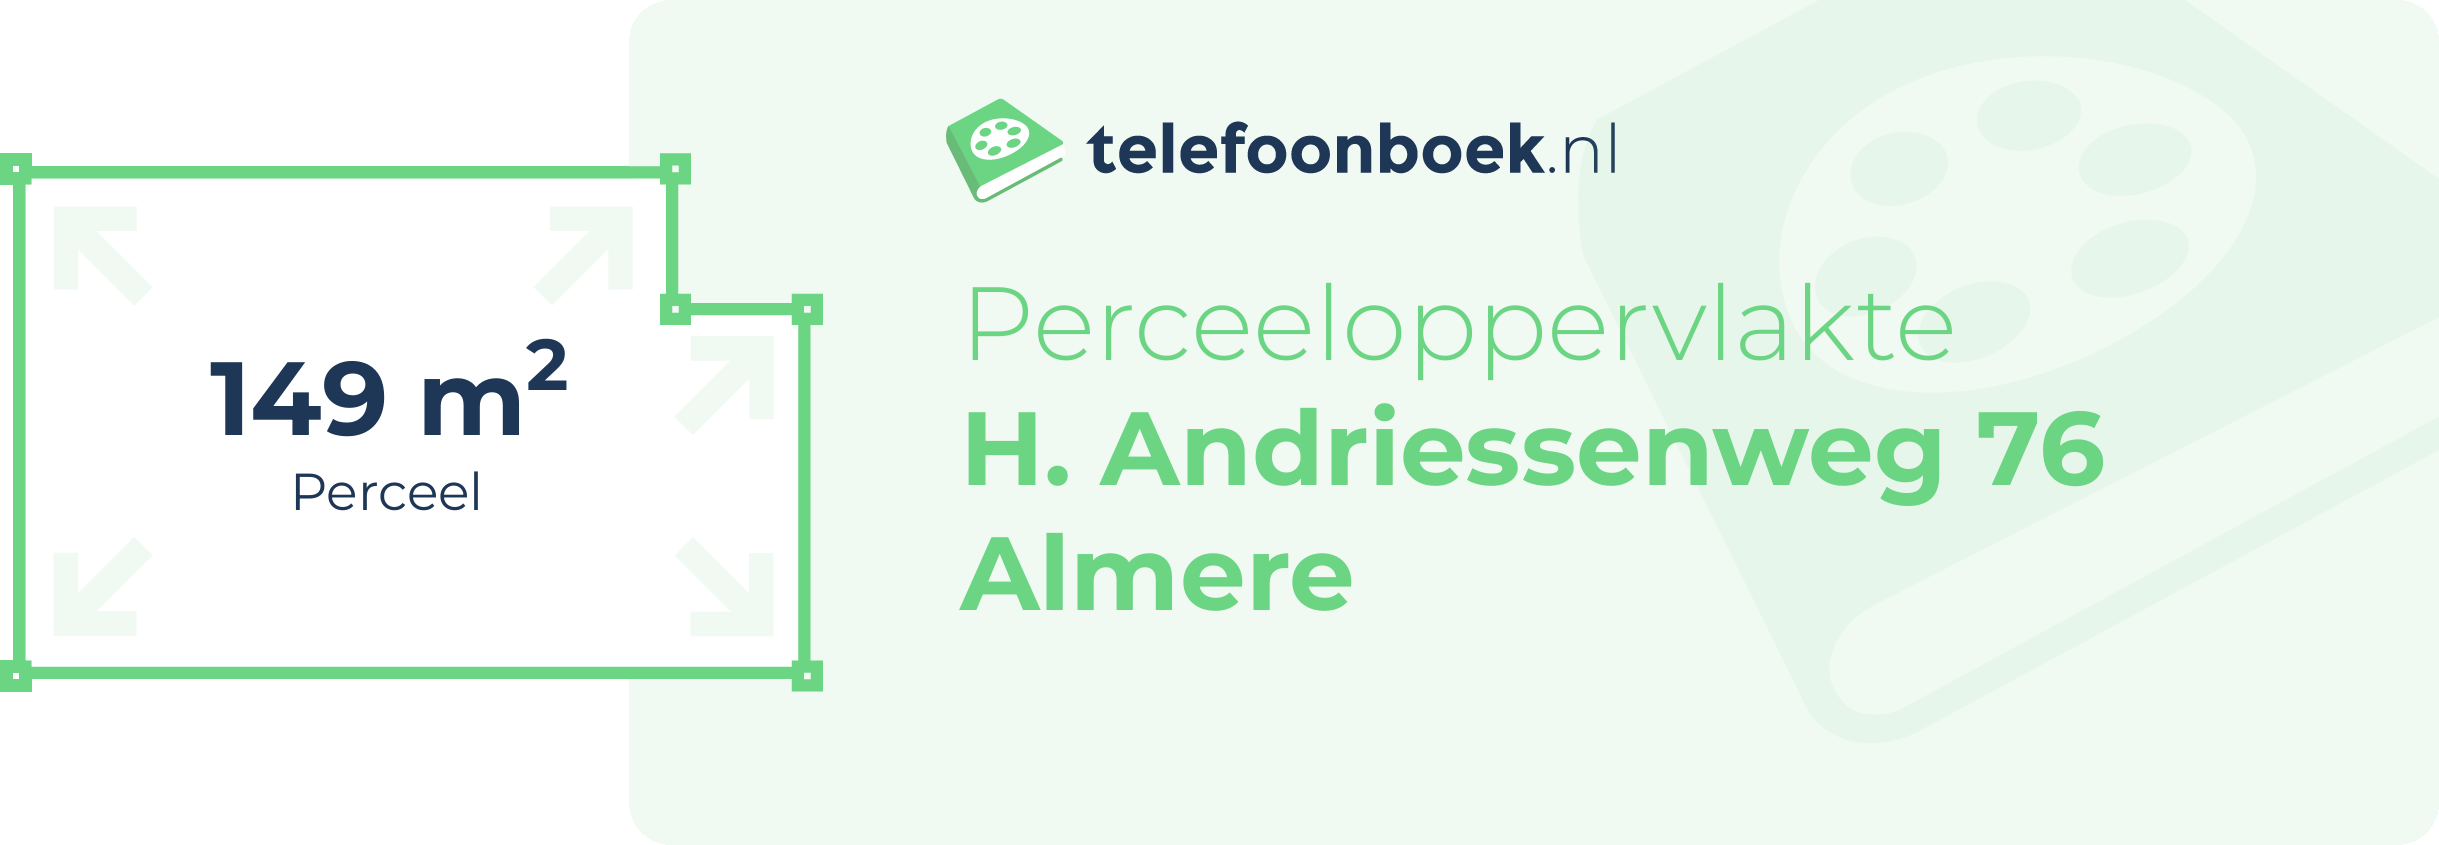 Perceeloppervlakte H. Andriessenweg 76 Almere